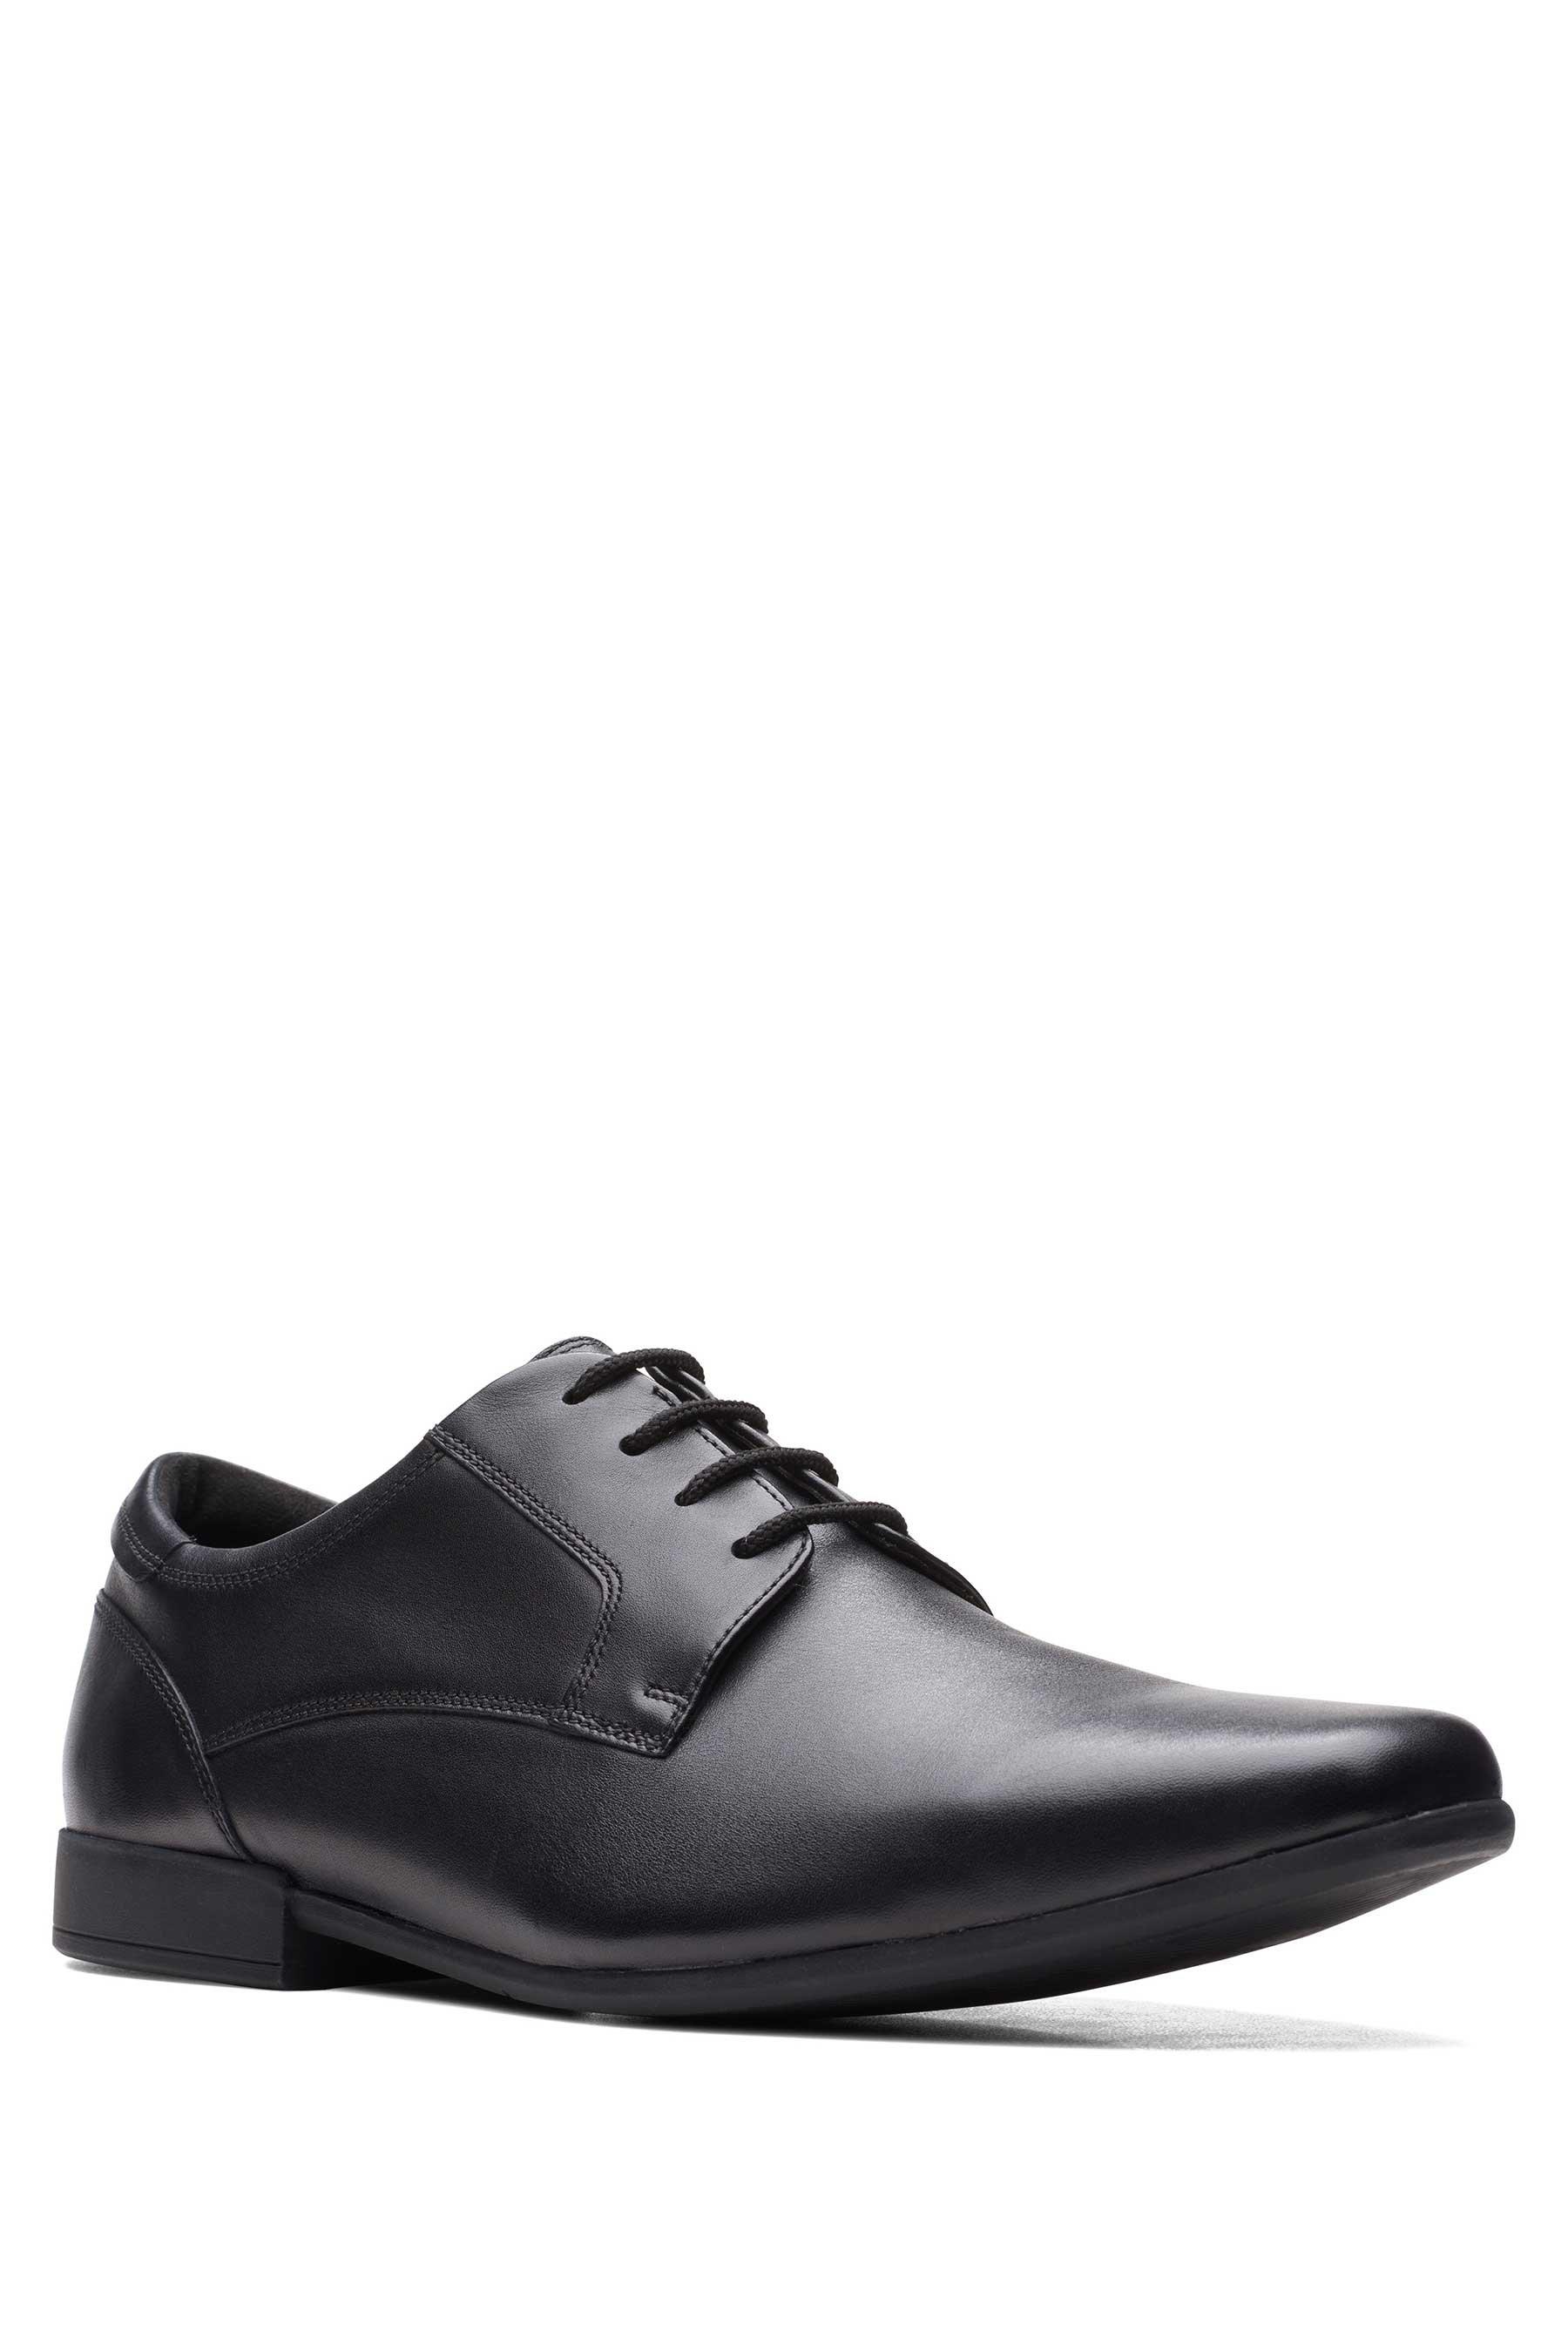 clarks sidton lace formal black shoes - mens - size: 7